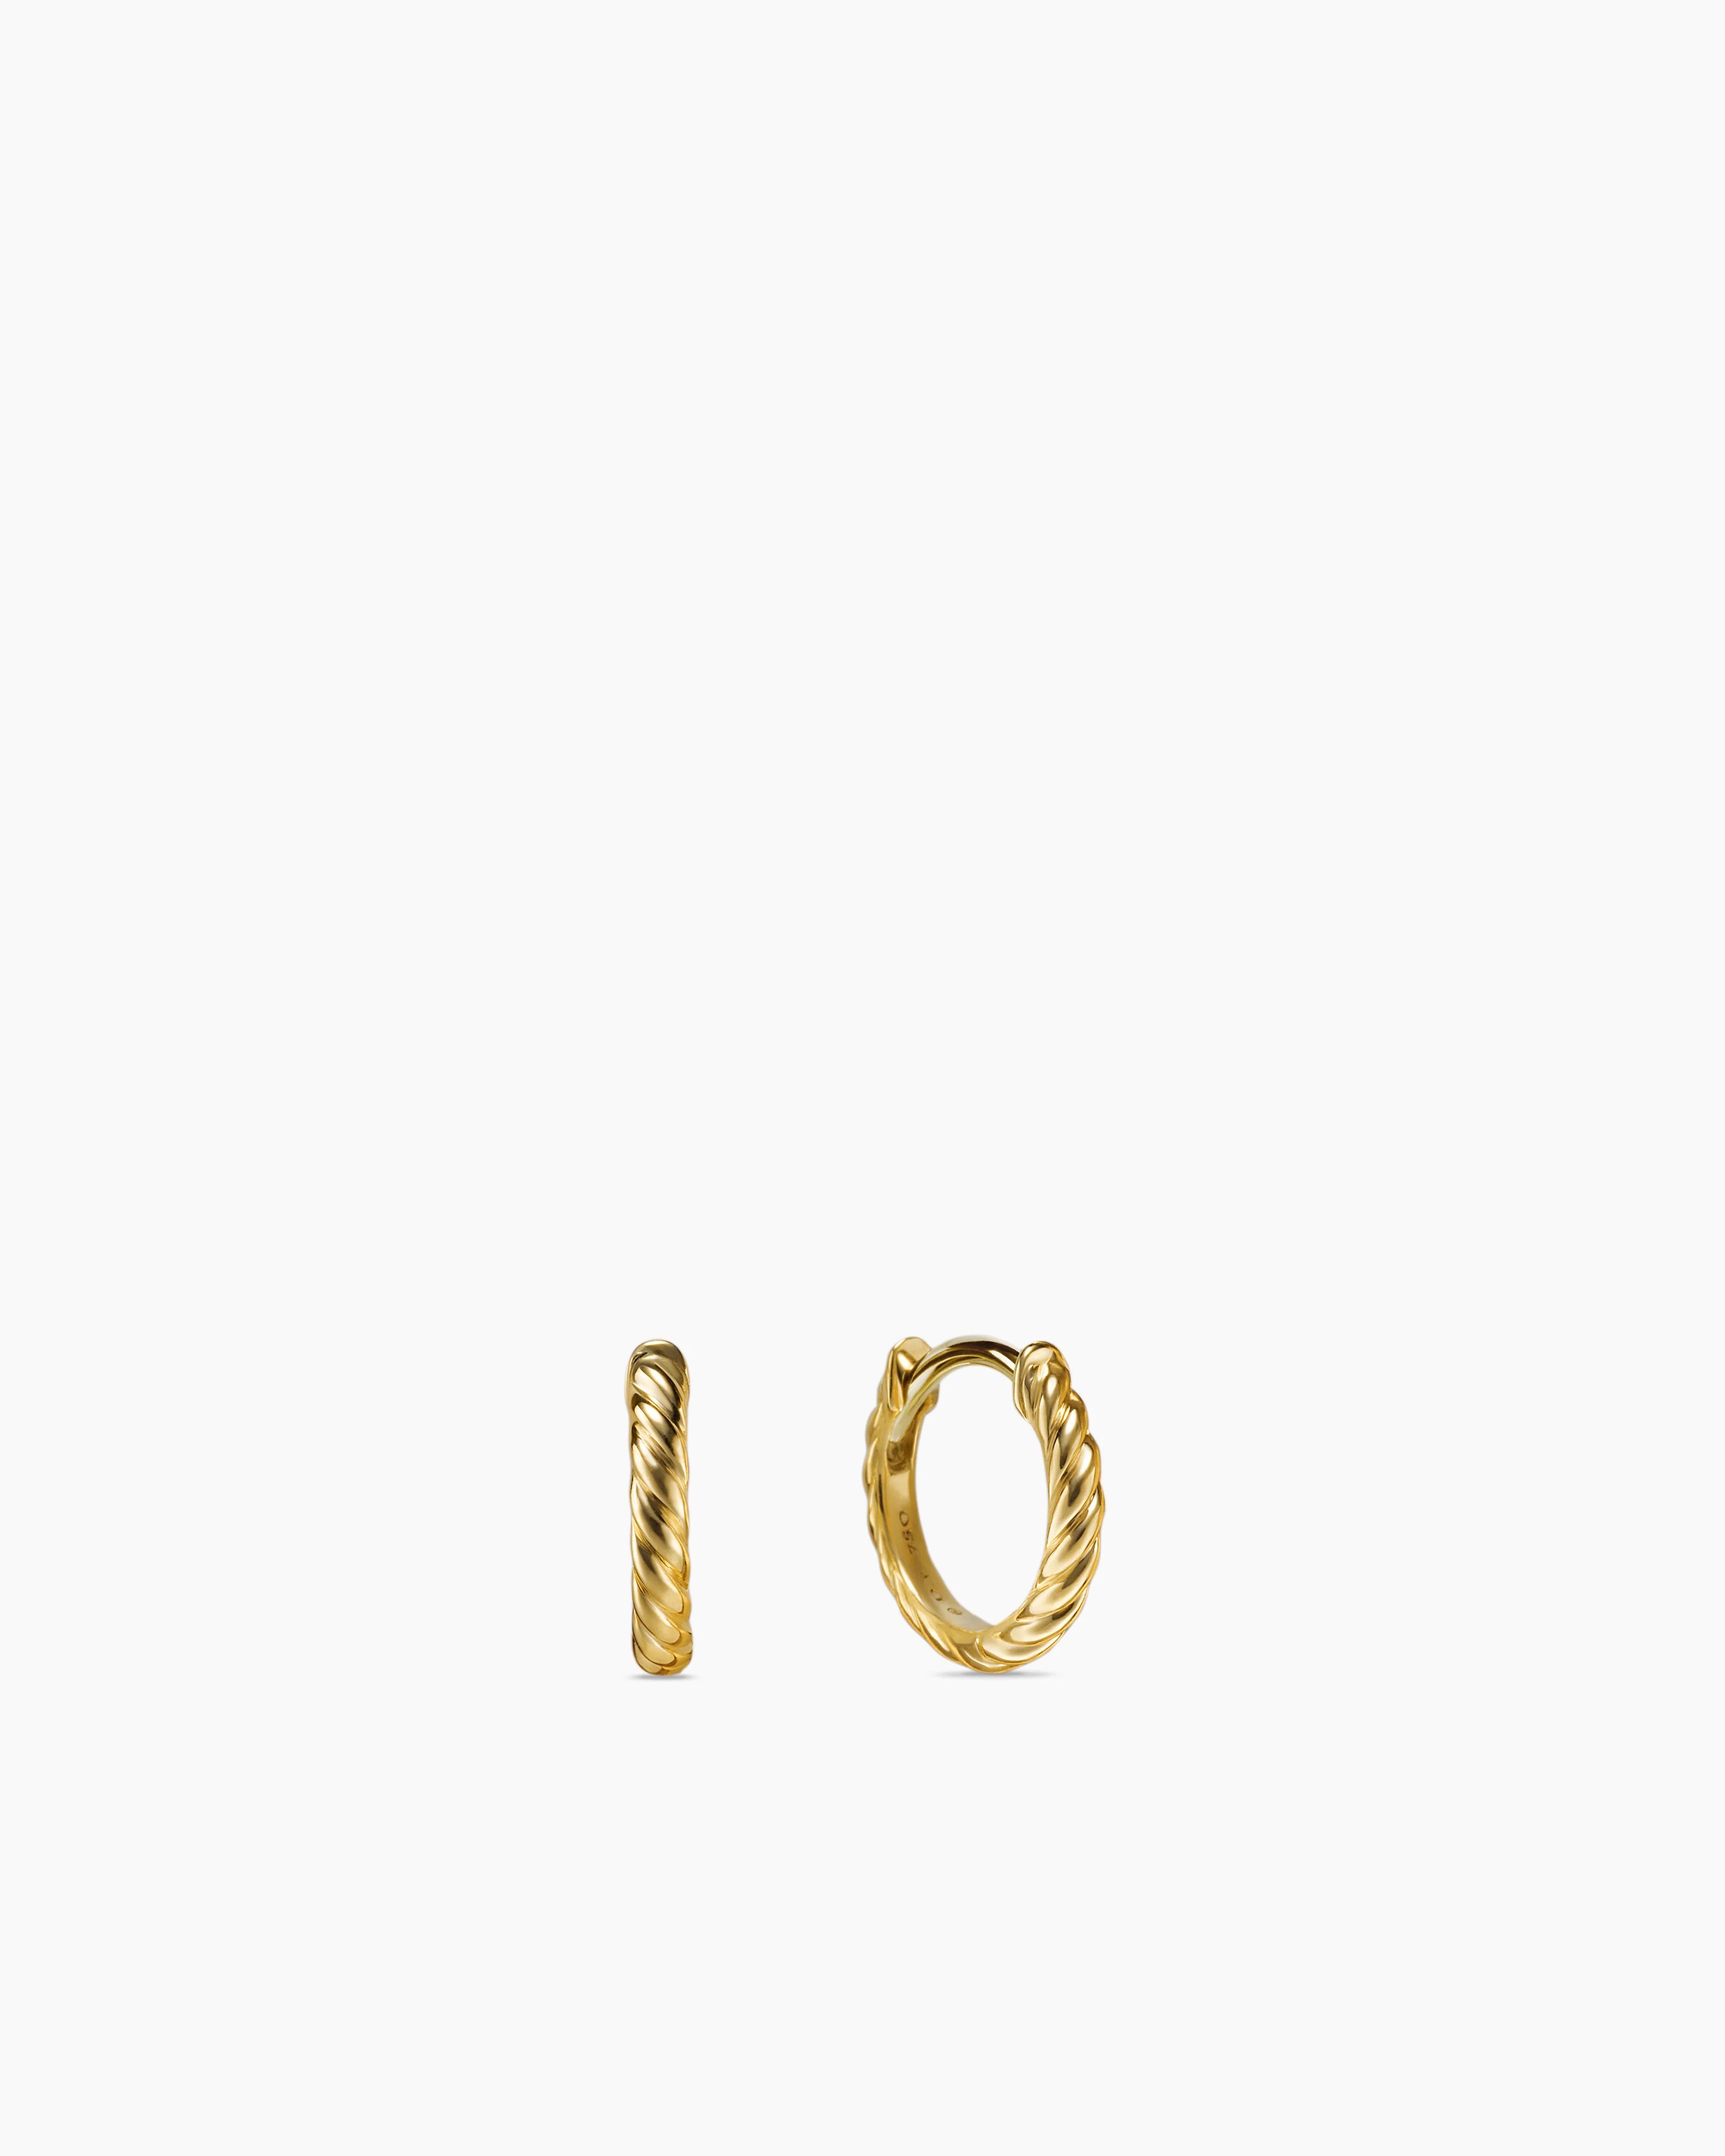 Sculpted Cable Huggie Hoop Earrings

18K Yellow Gold, 10.7mm | David Yurman